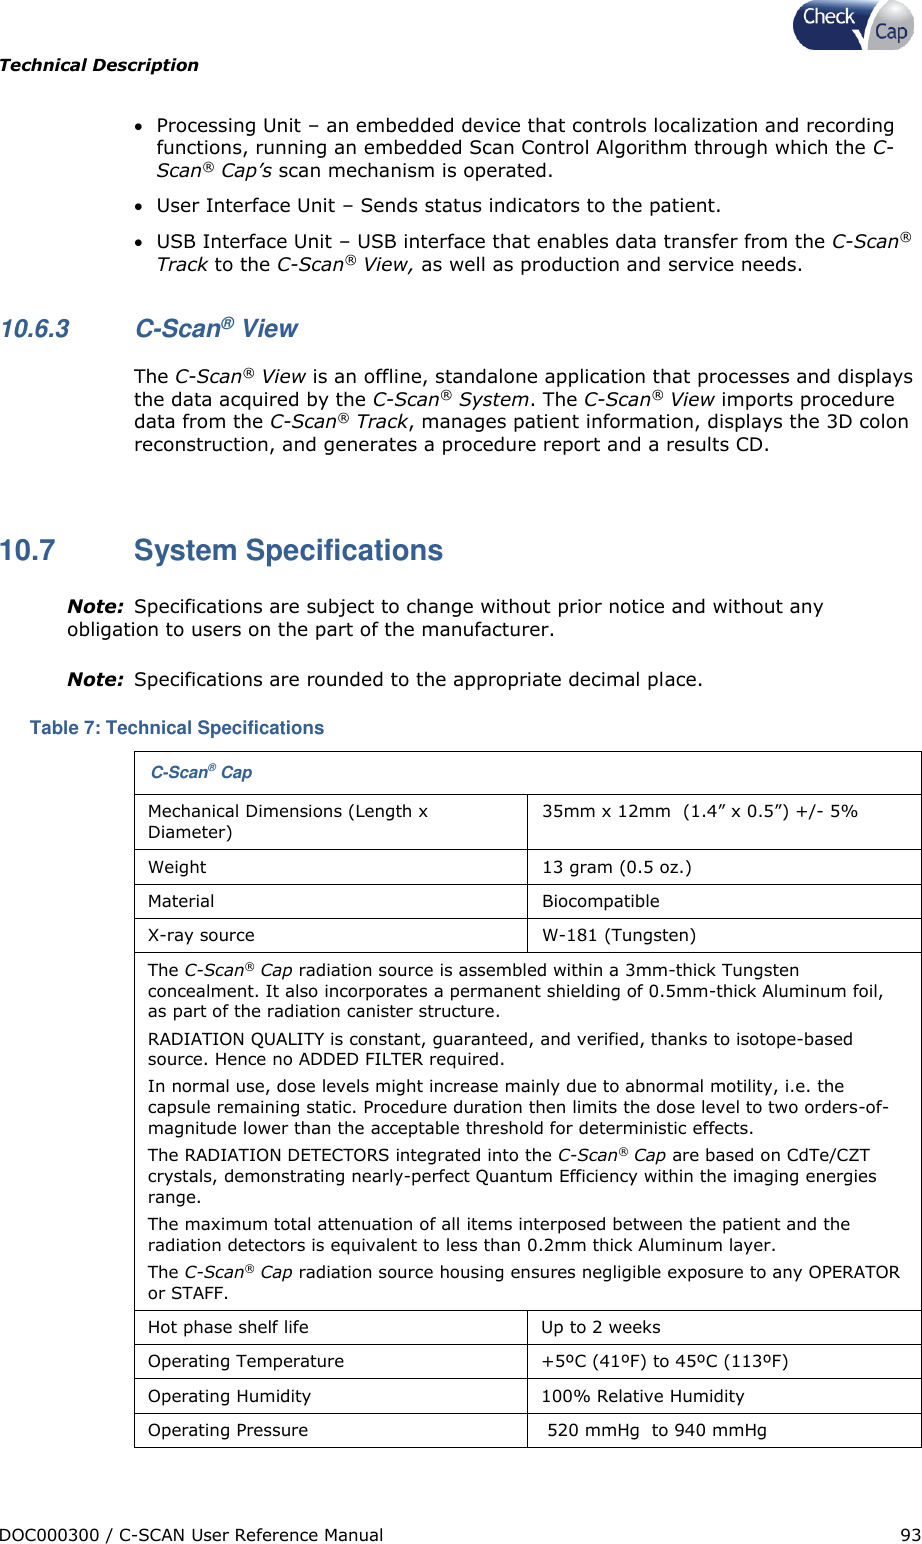 Page 93 of Check Cap CAP10007506 C-Scan Cap transceiver User Manual Title